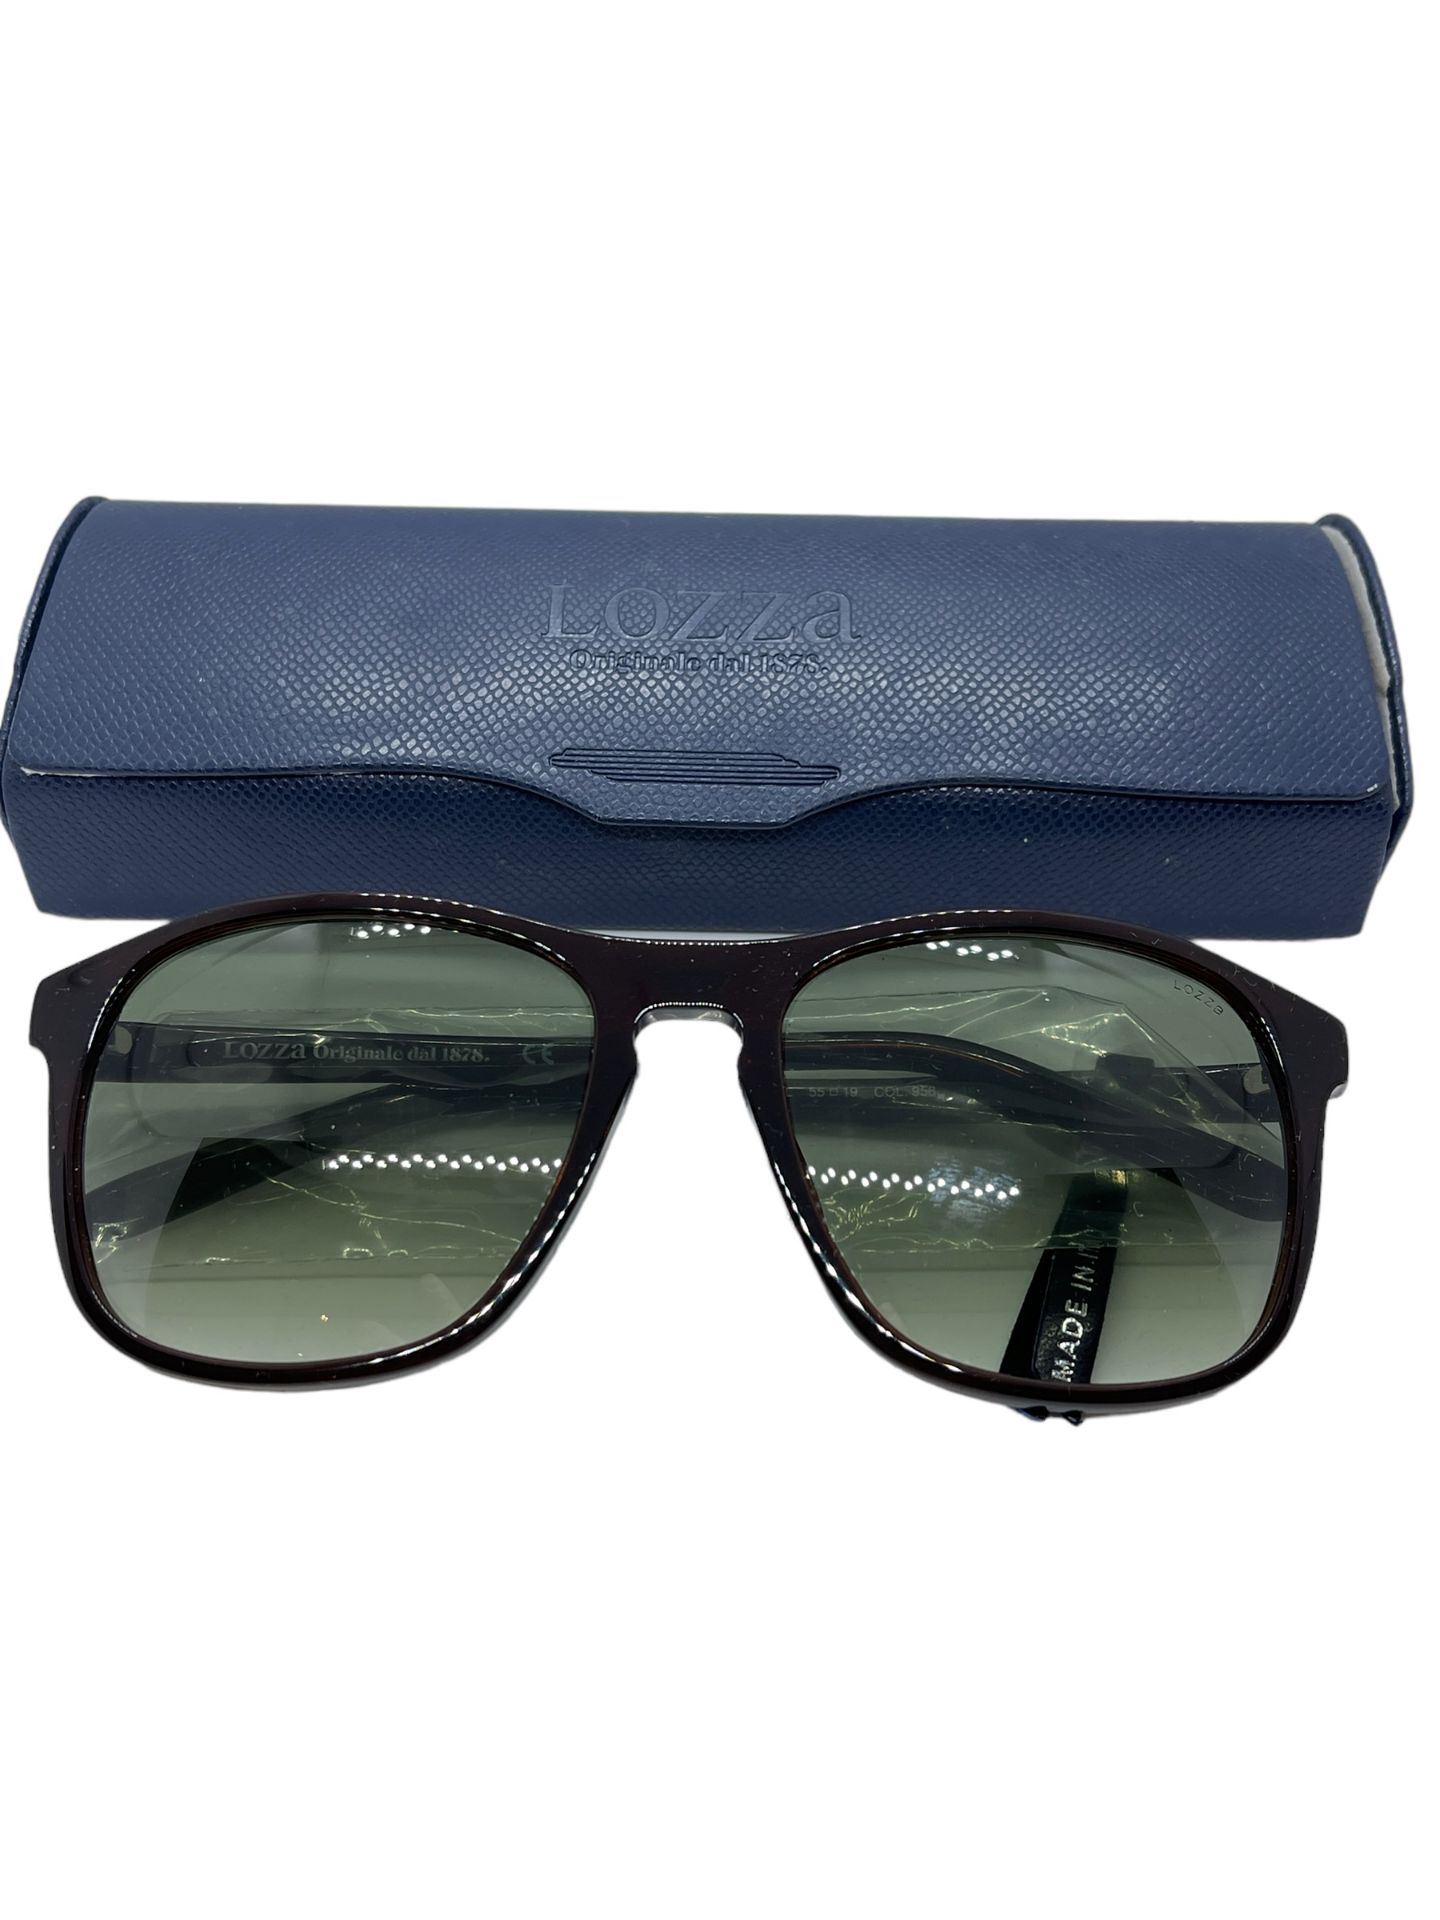 Lozza men's sunglasses boxed brand new - Bild 4 aus 4